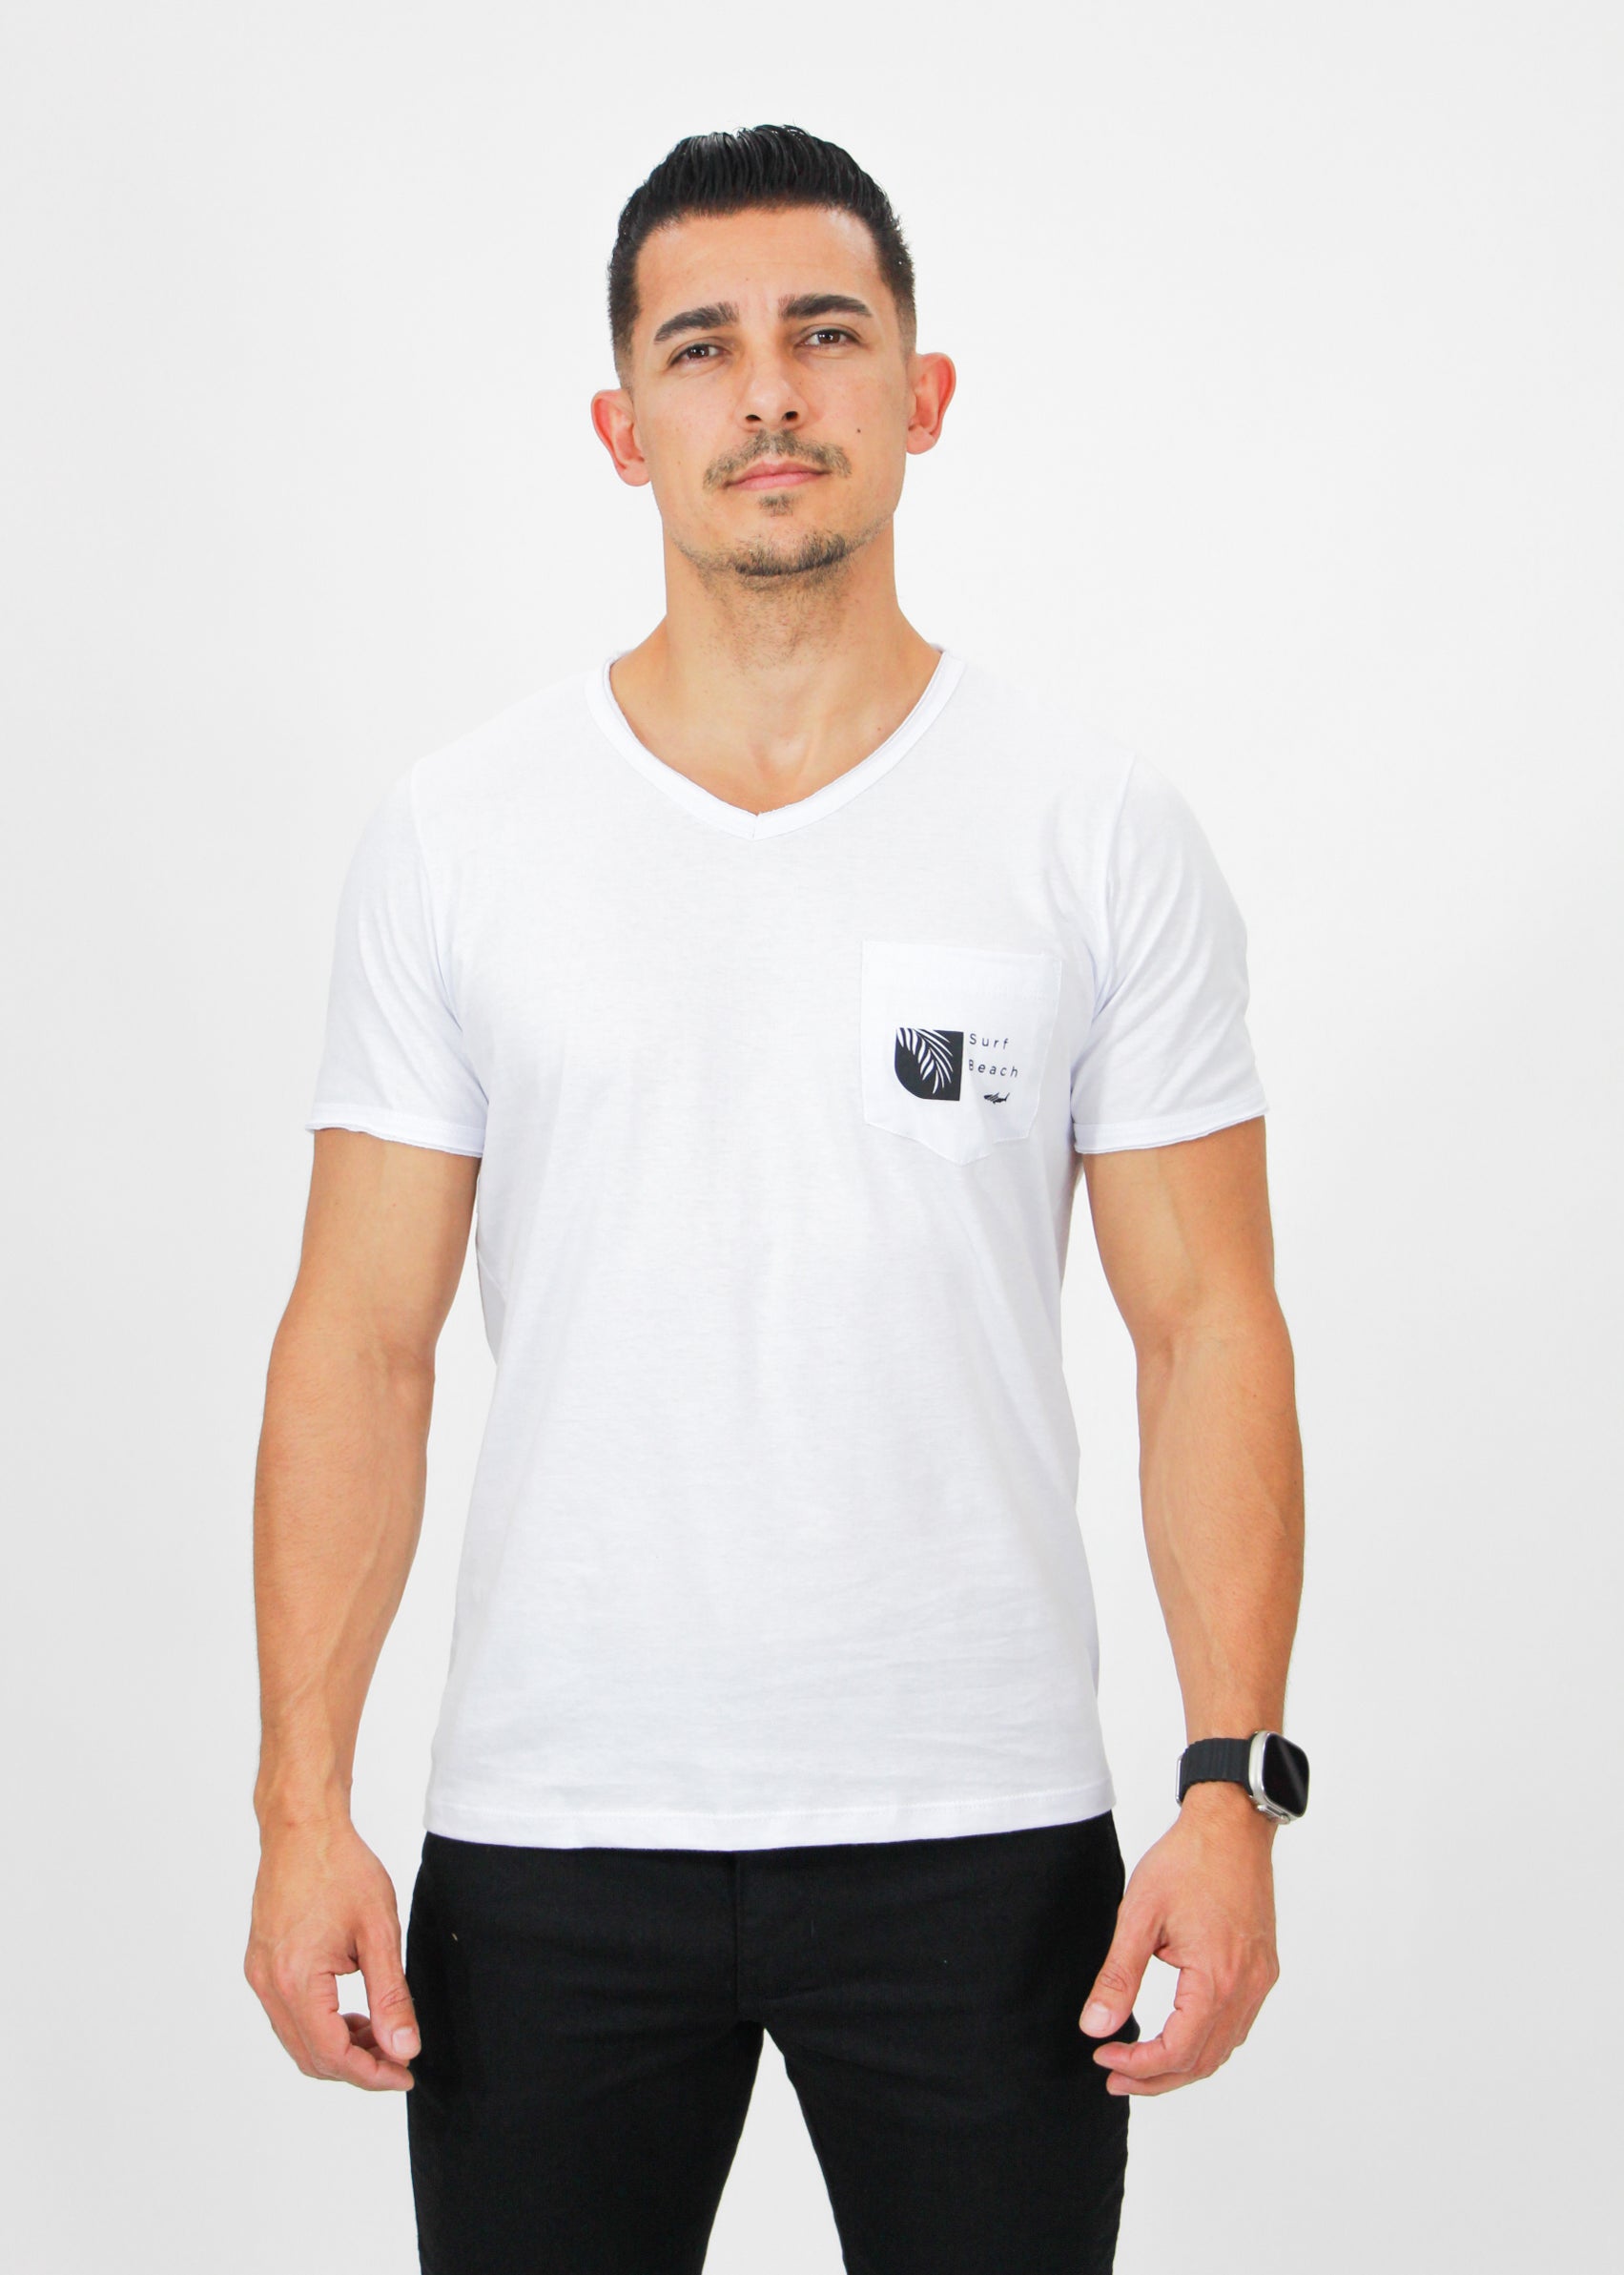 Camiseta Slim Surf Beach - Branca